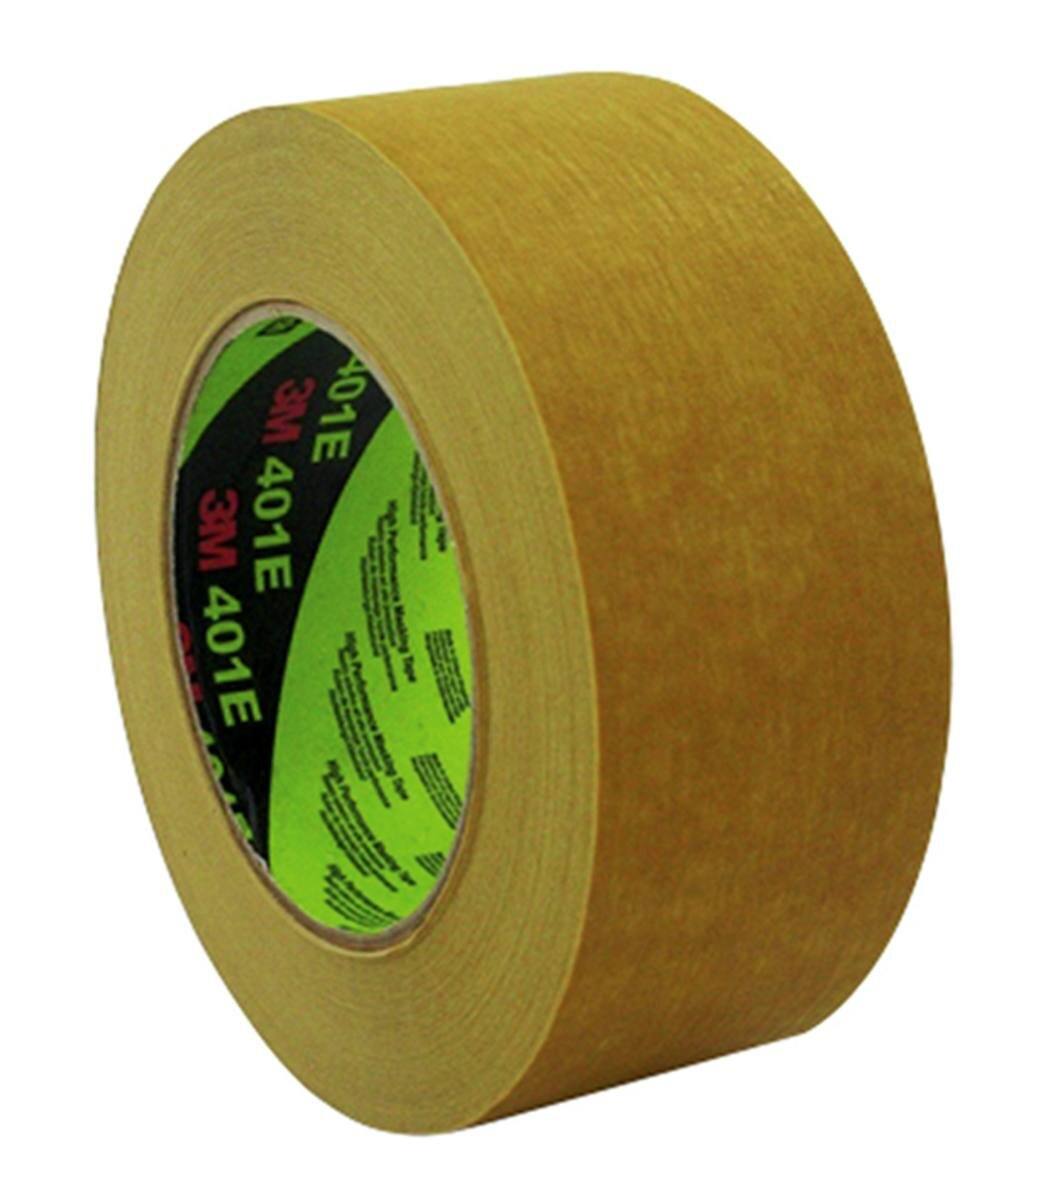 3M Crepe tape 401E, brown, 36 mm x 50 m, 0.160 mm